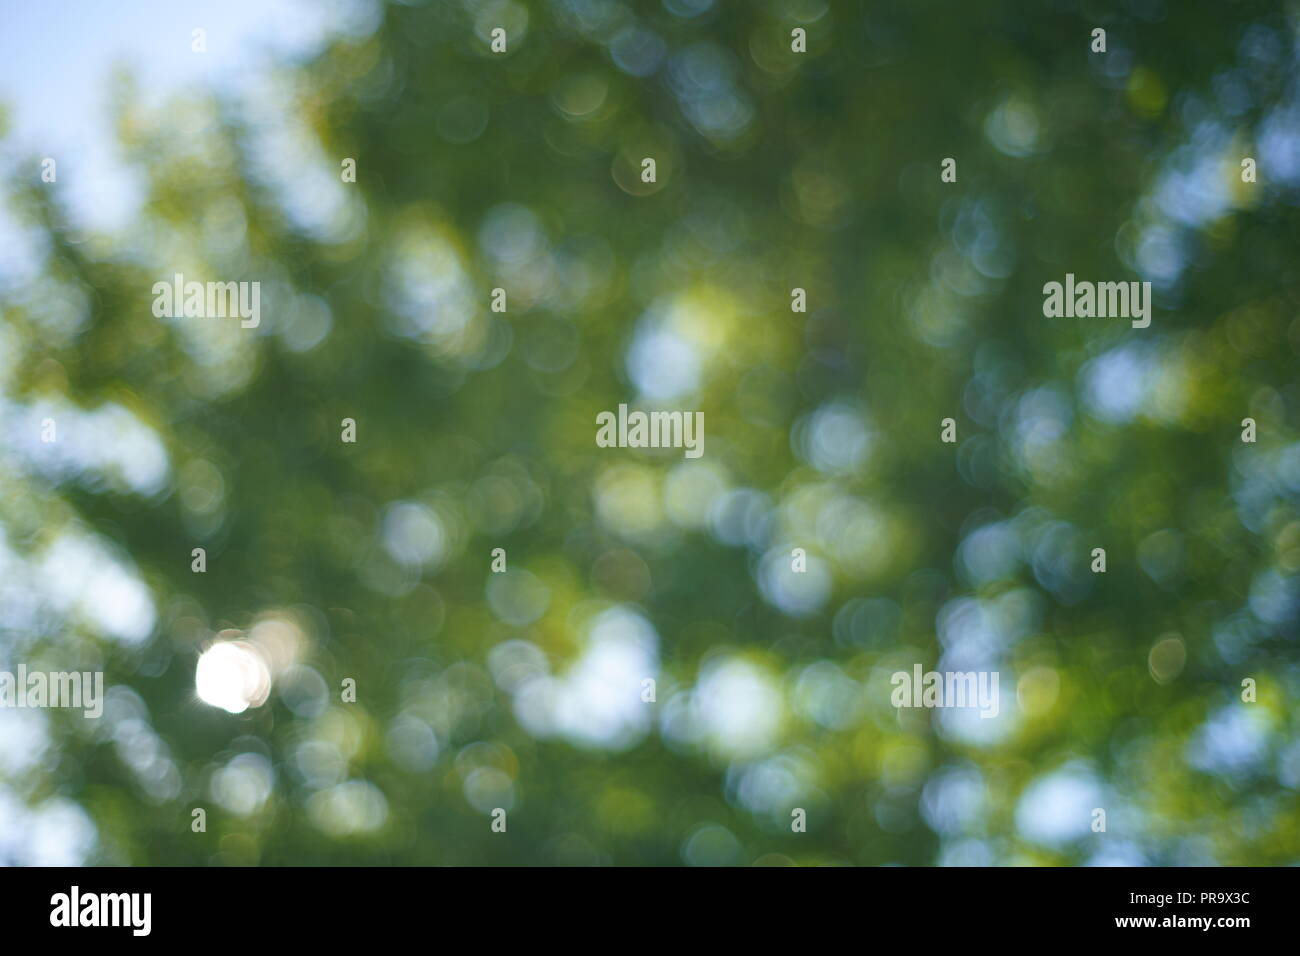 lens blur through leaves Stock Photo